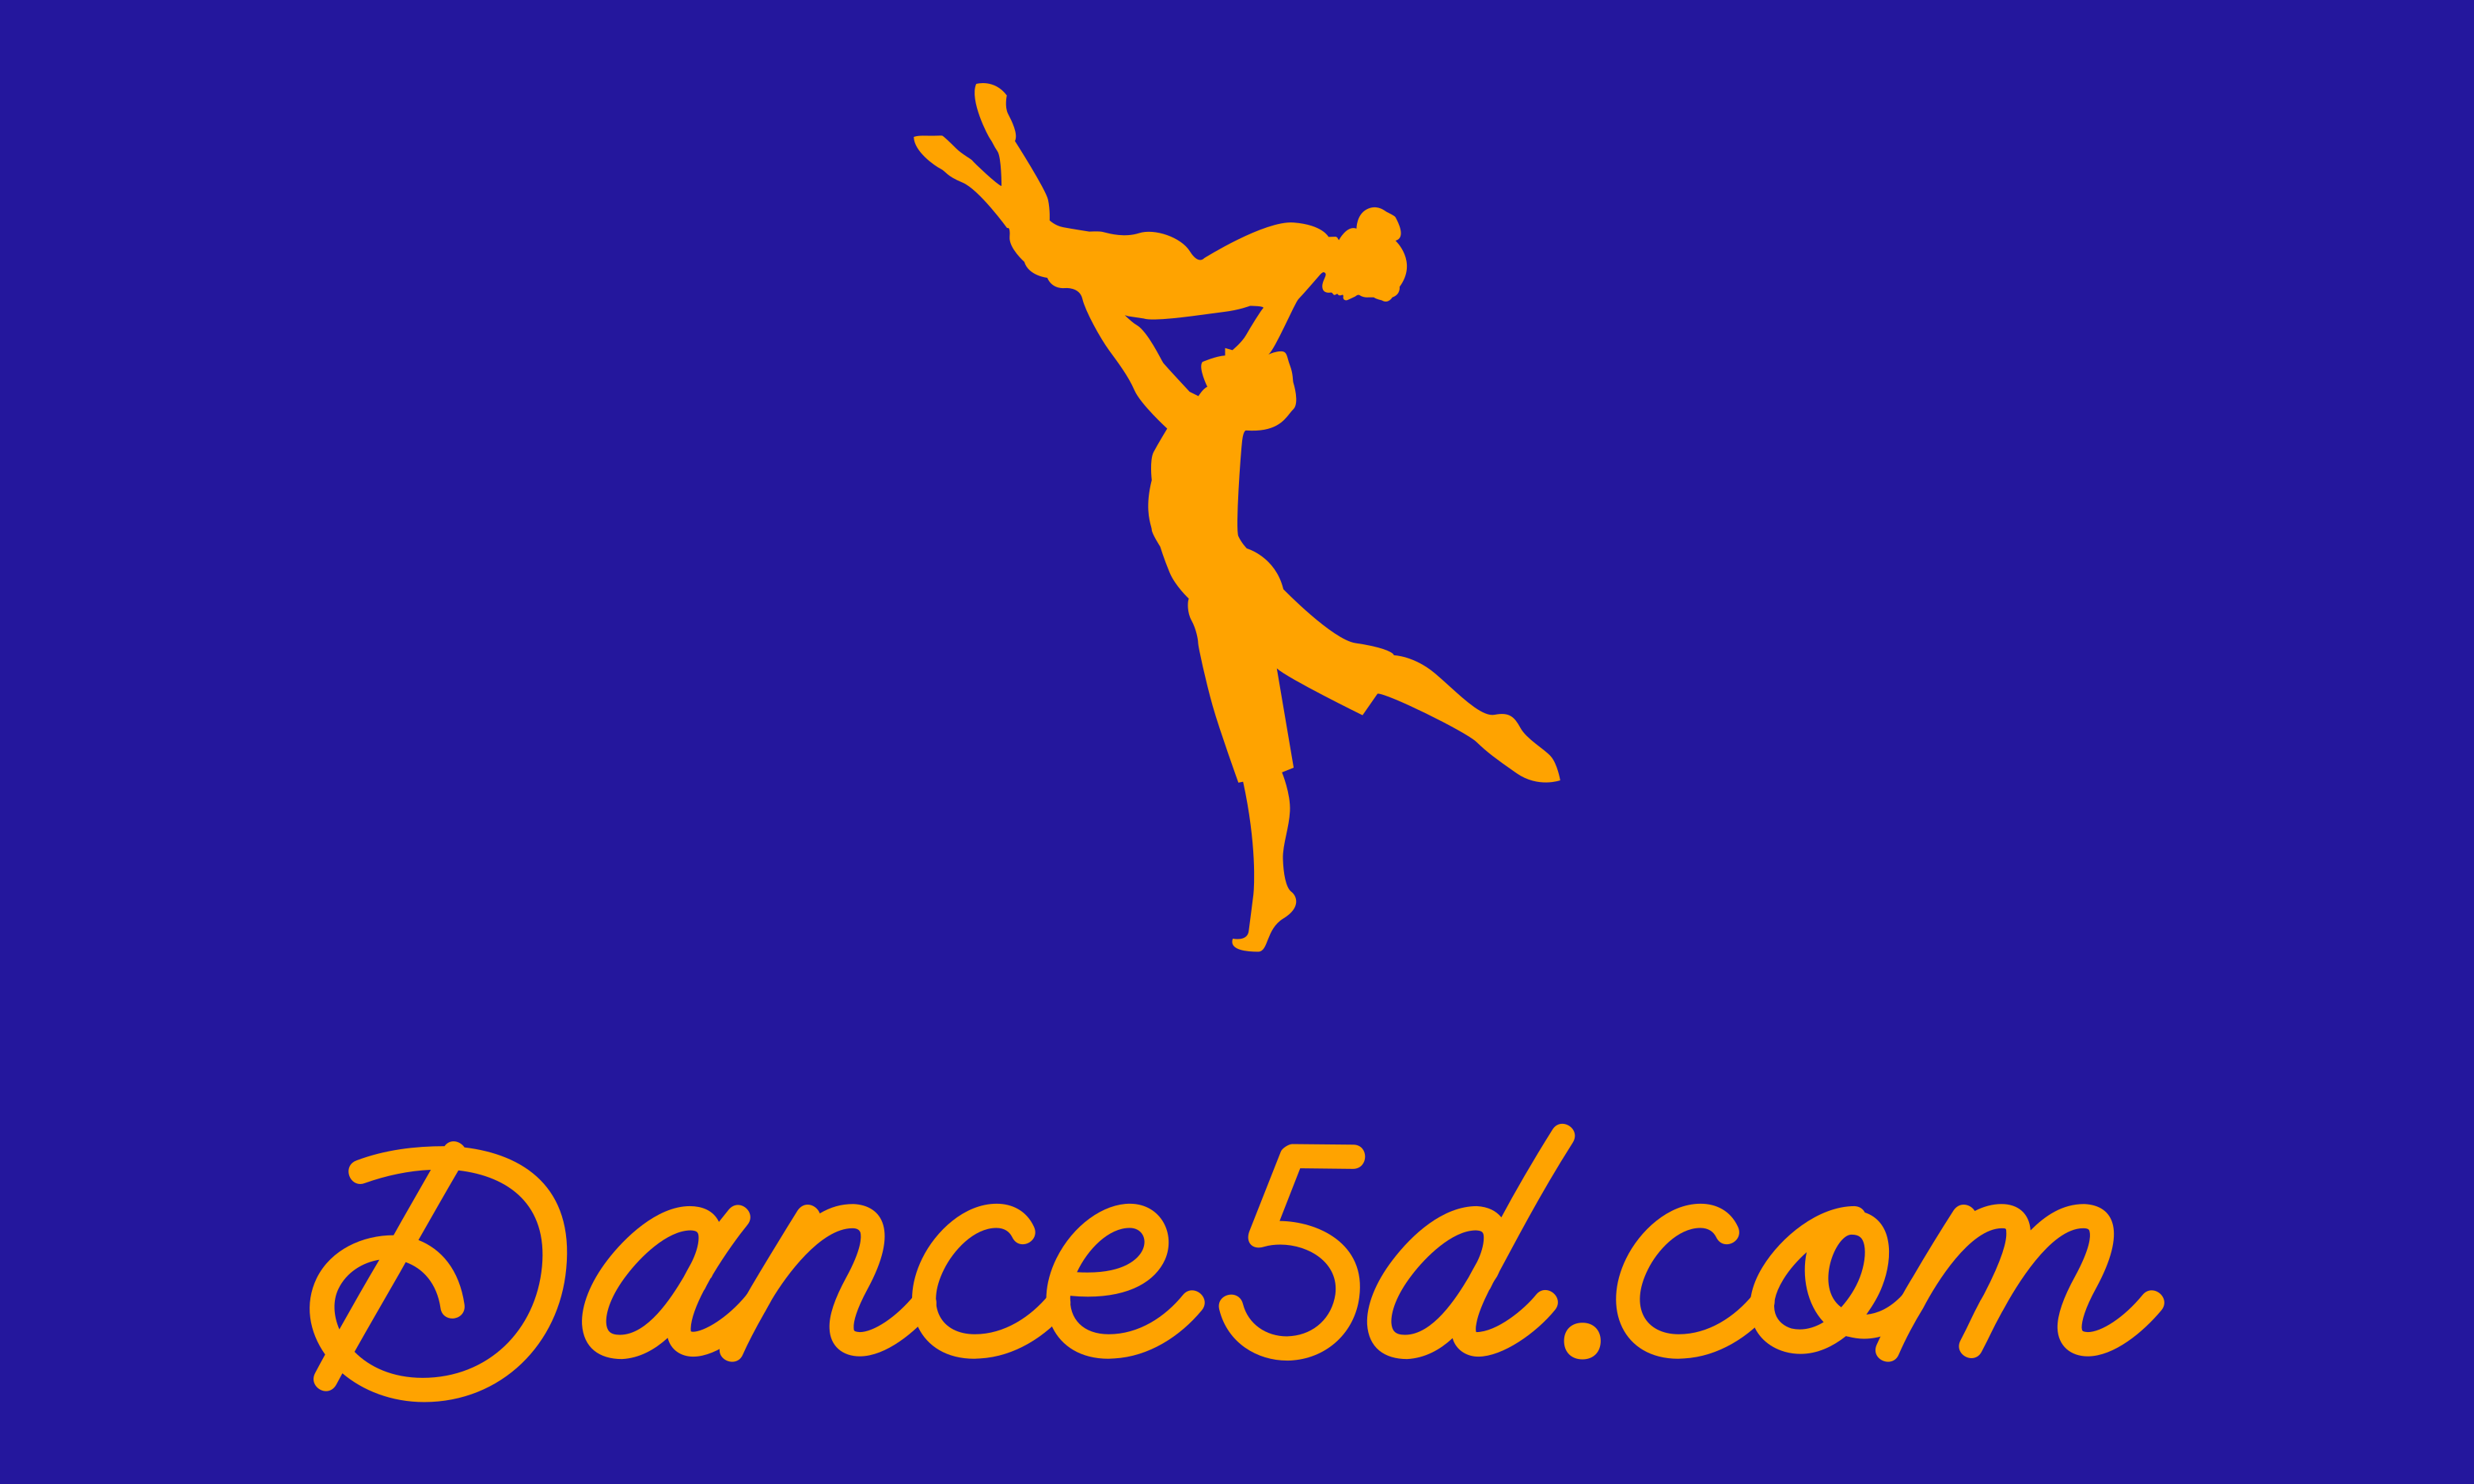 Dance 5d logo baner